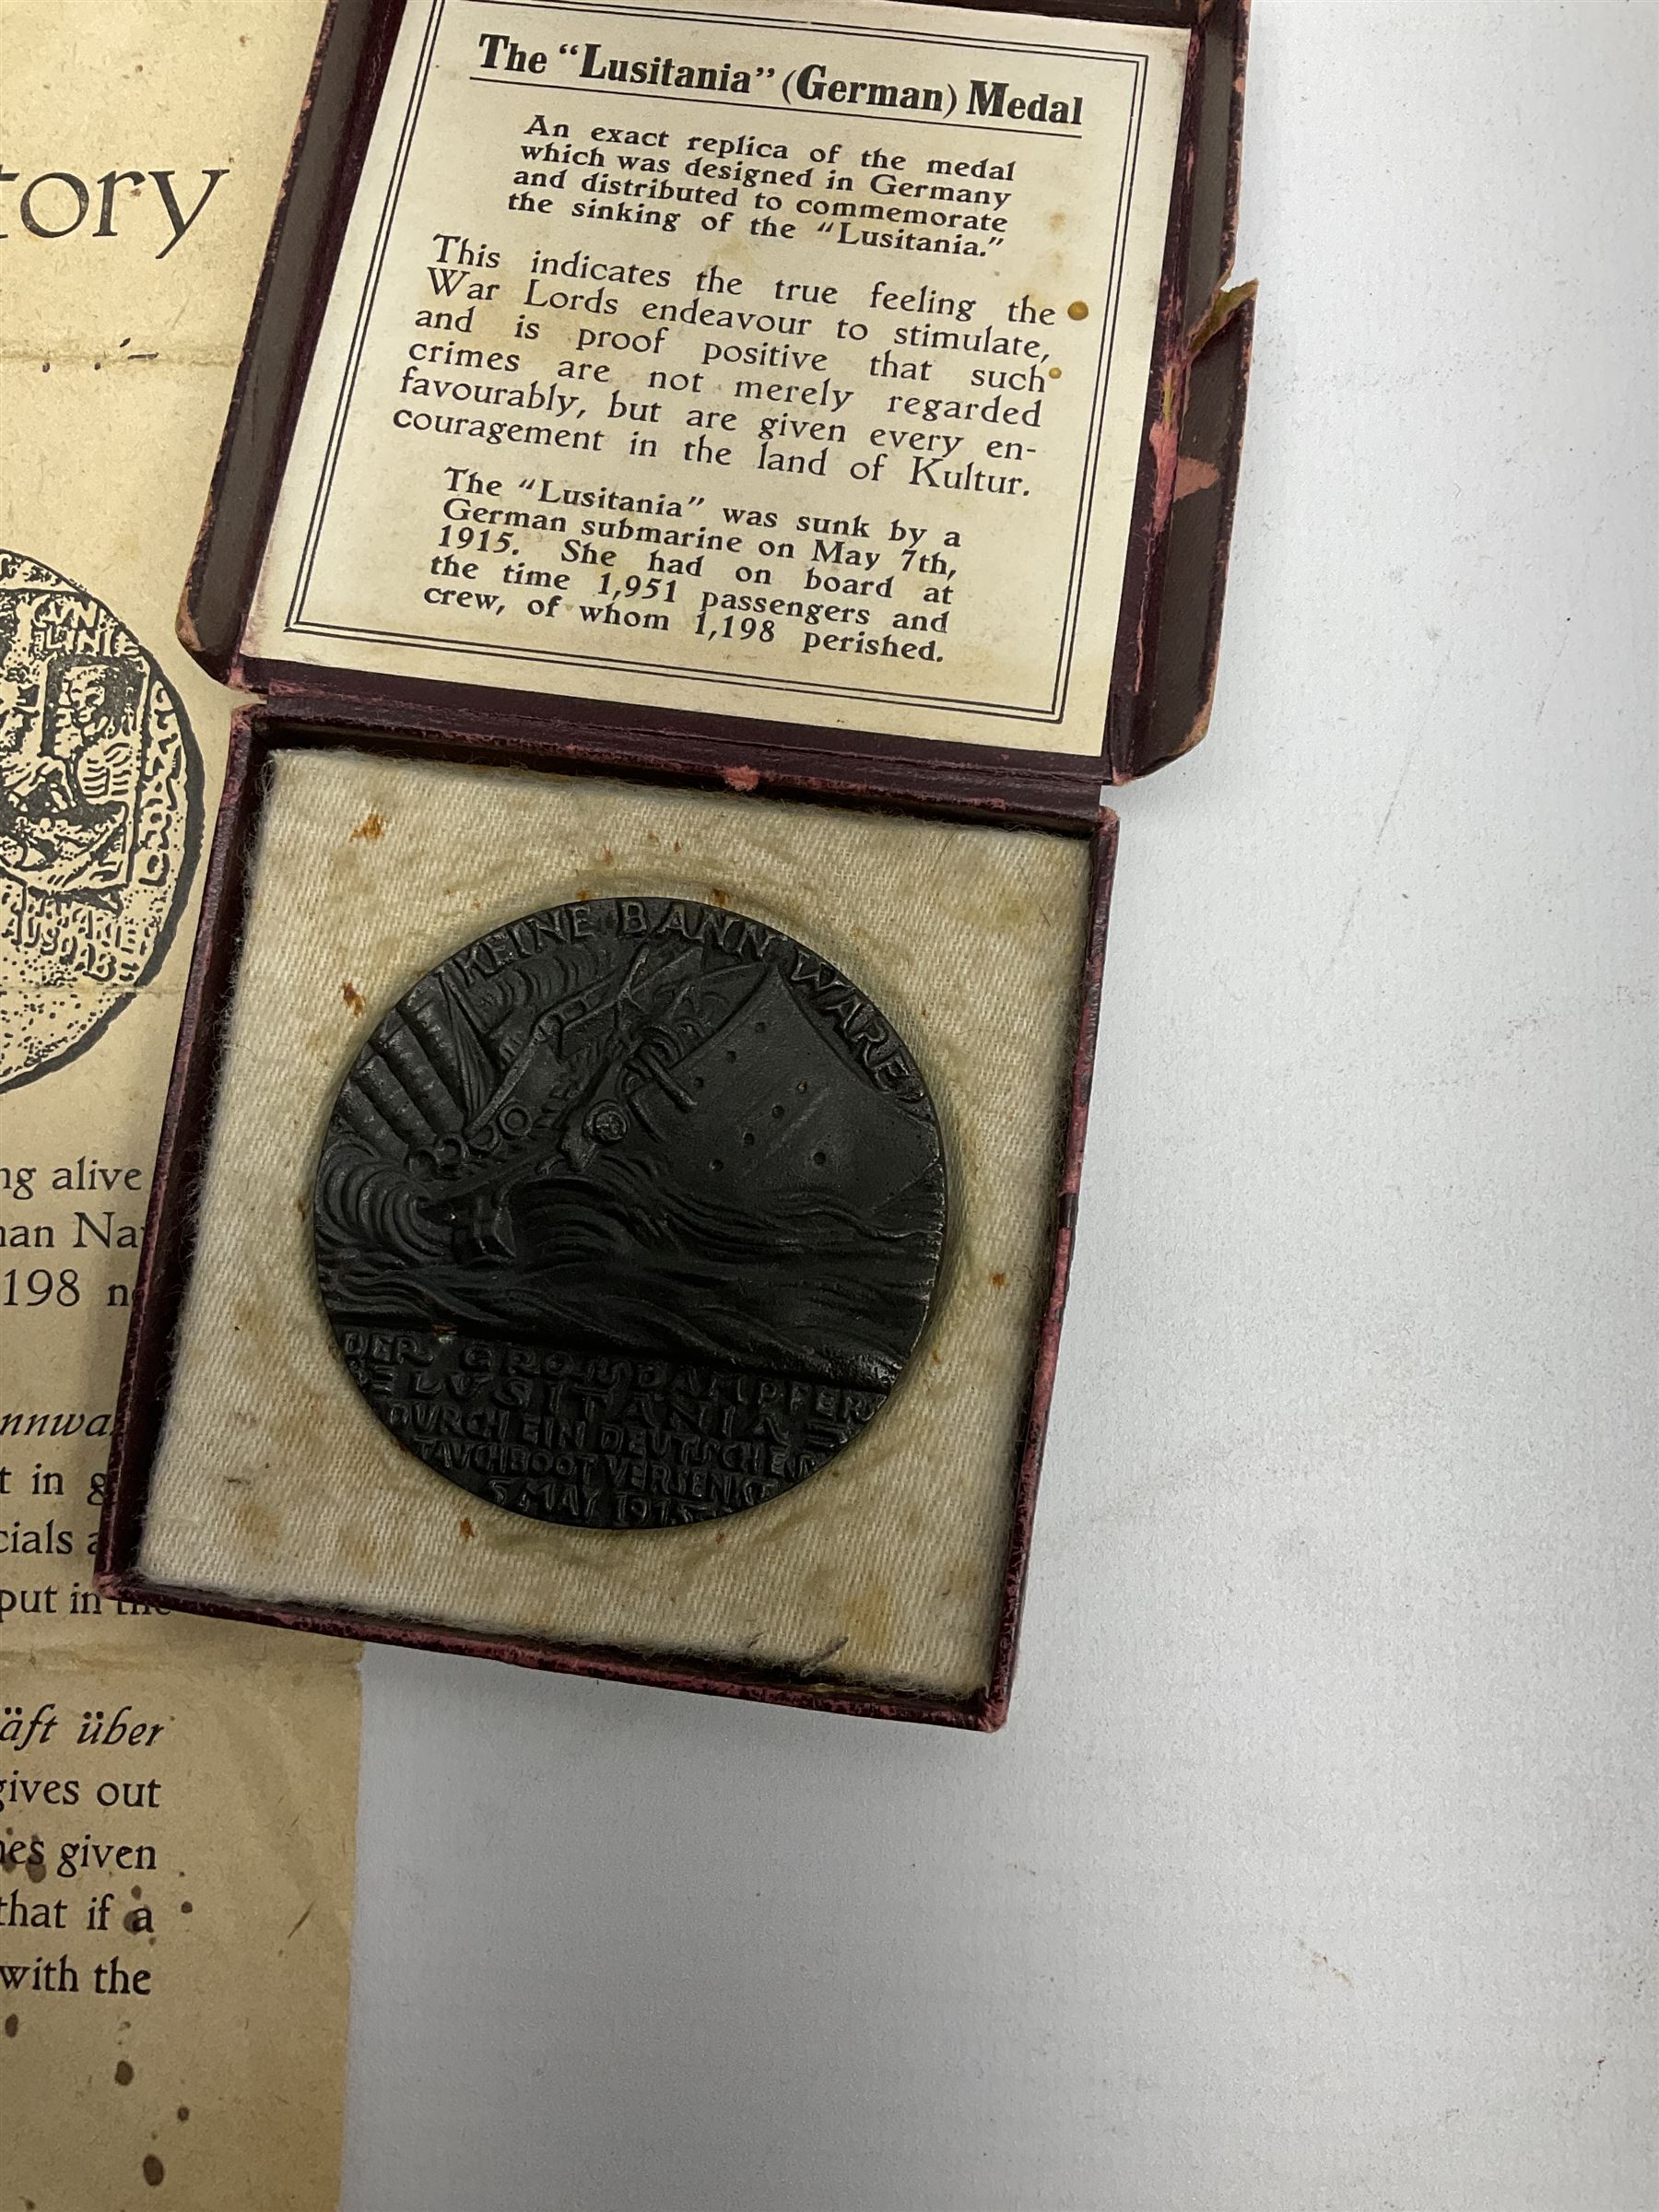 Lusitania replica medal - Image 14 of 21